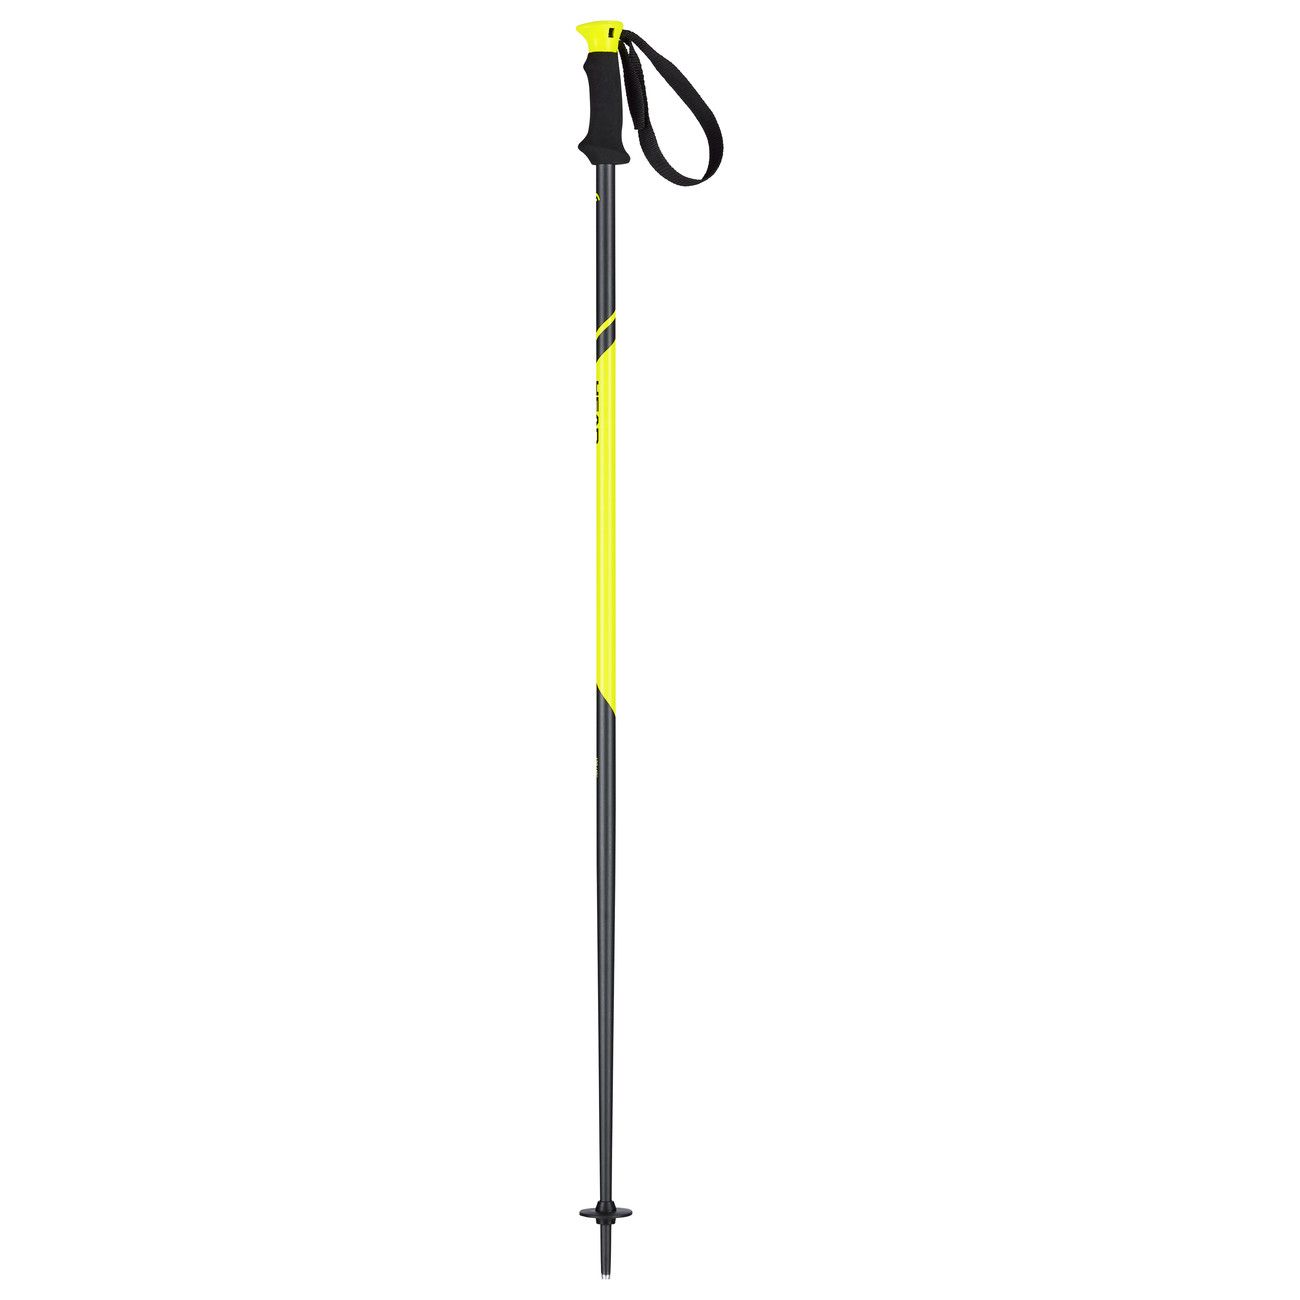 Head Multi S Yellow 2020, 120 cm. Achat bâtons de ski alpin homme Head chez Sports Aventure